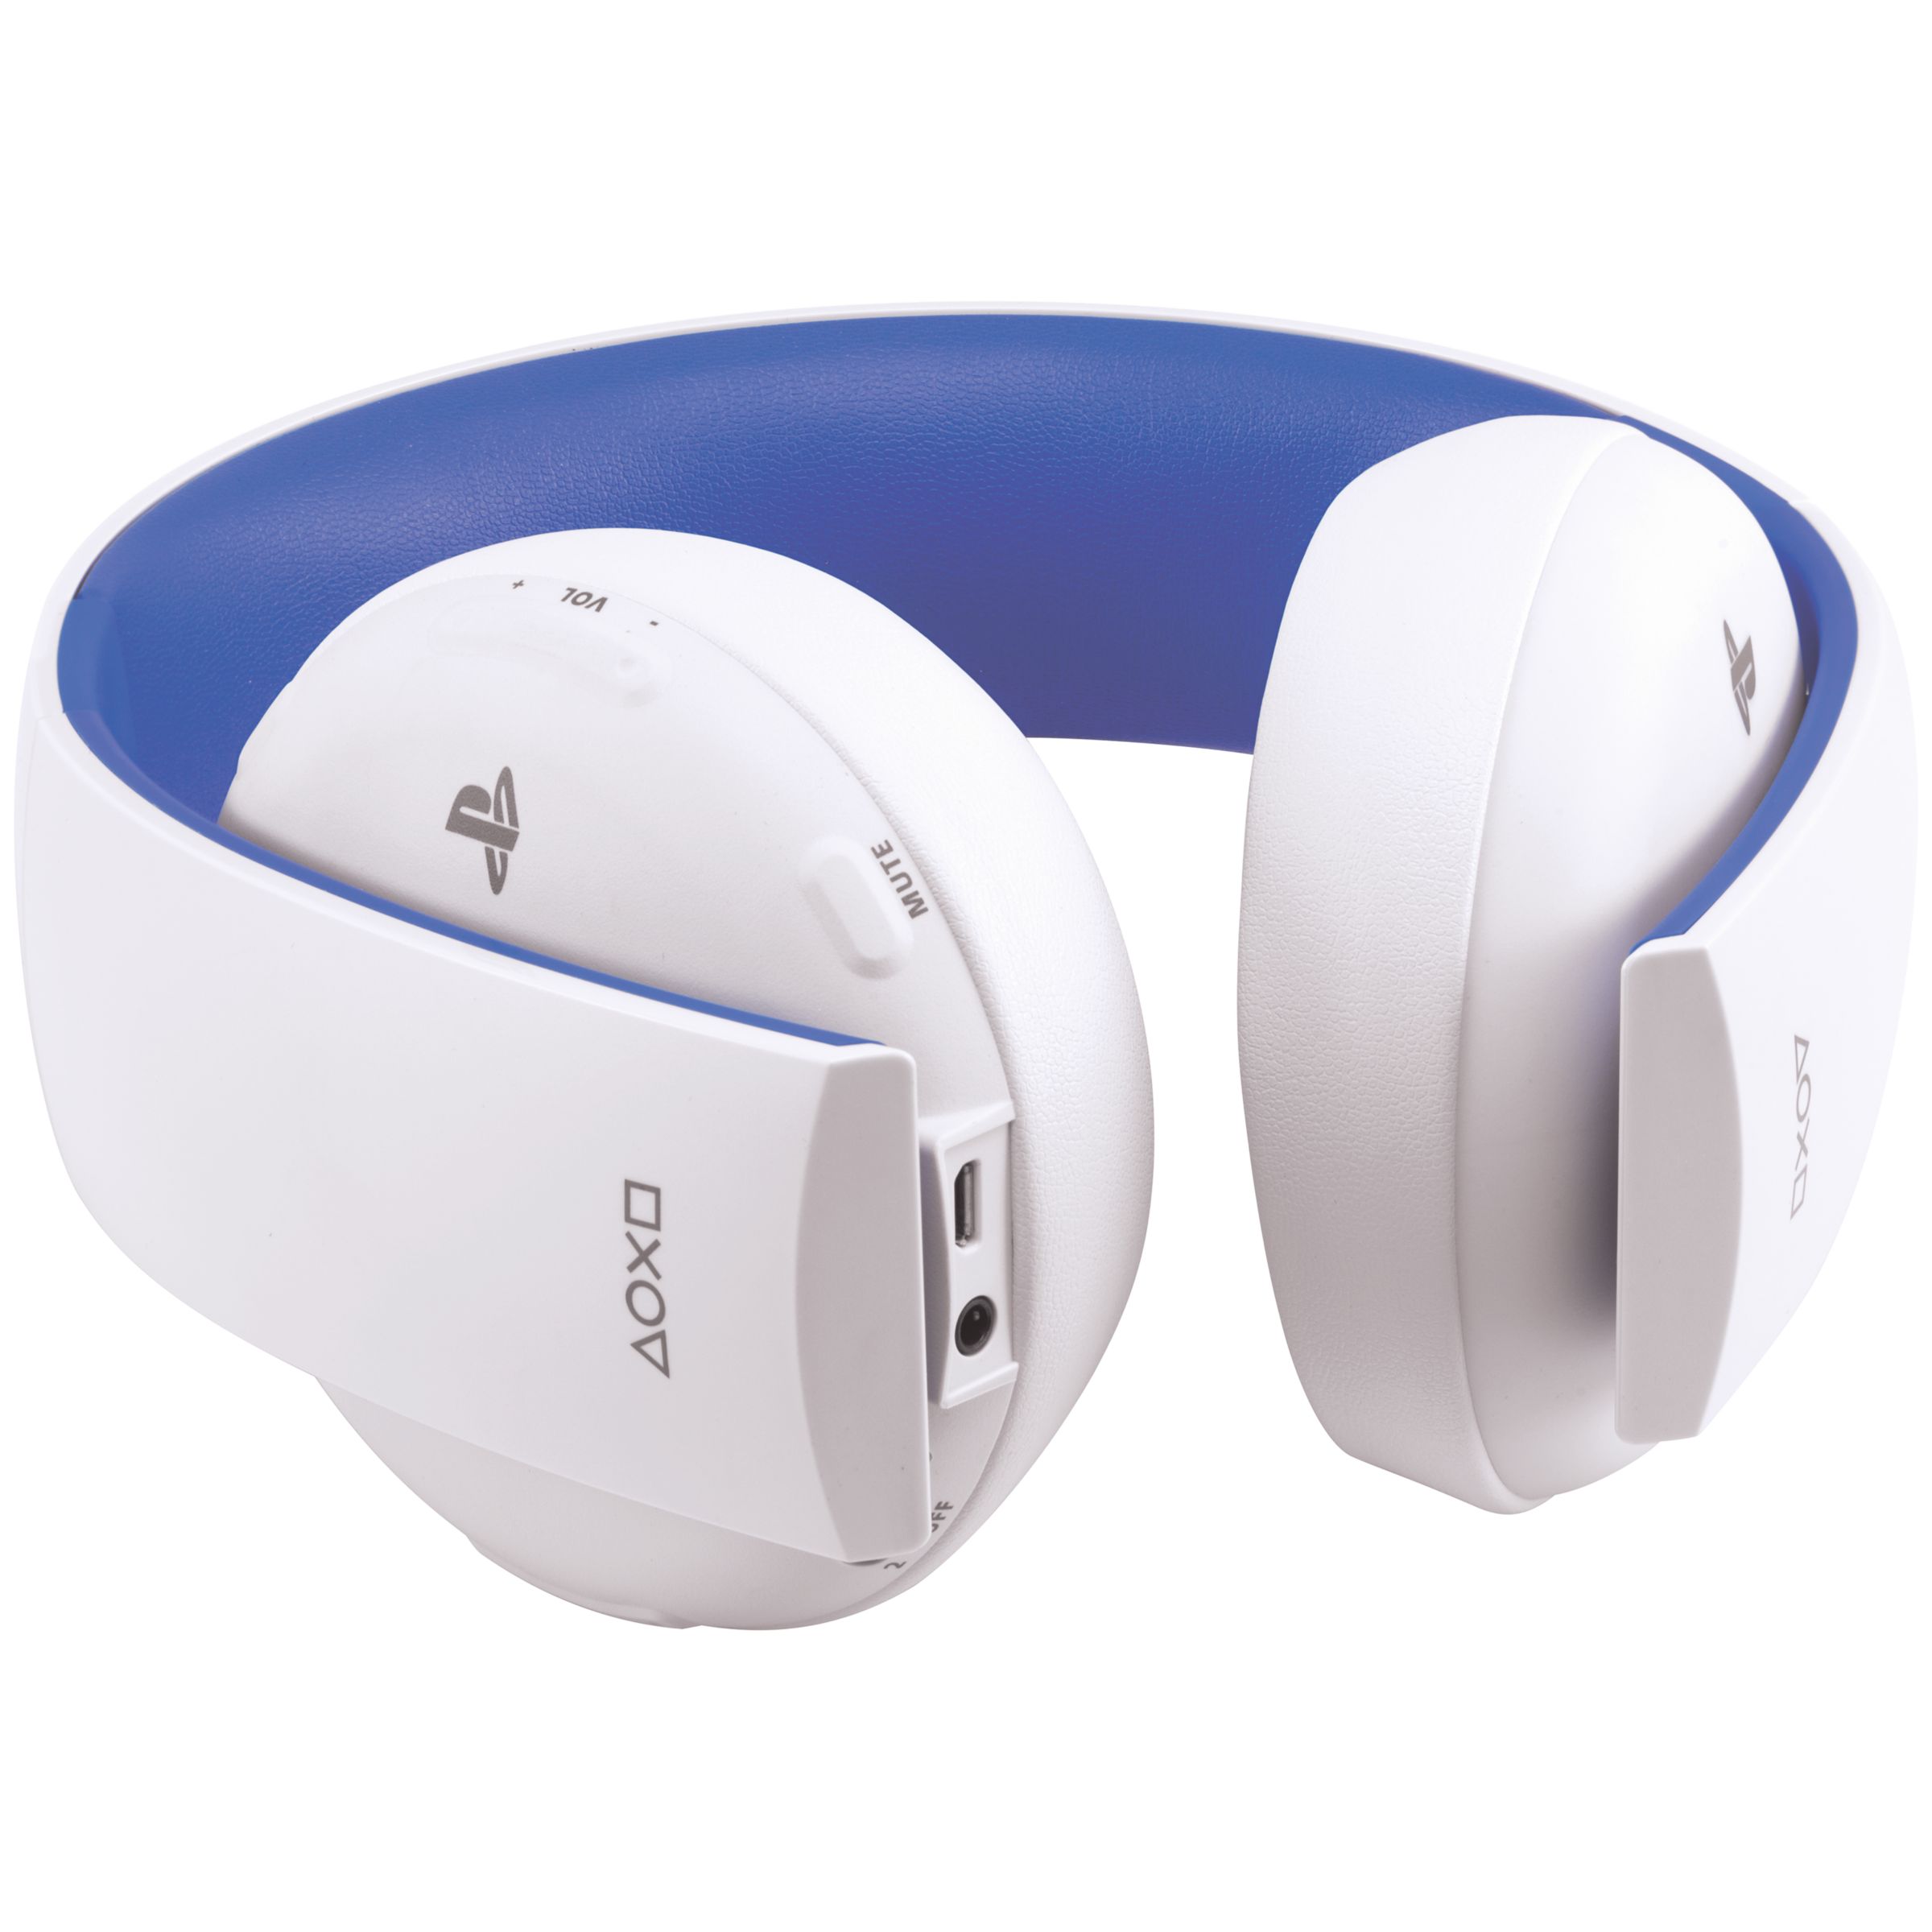 sony ps4 wireless headset 2.0